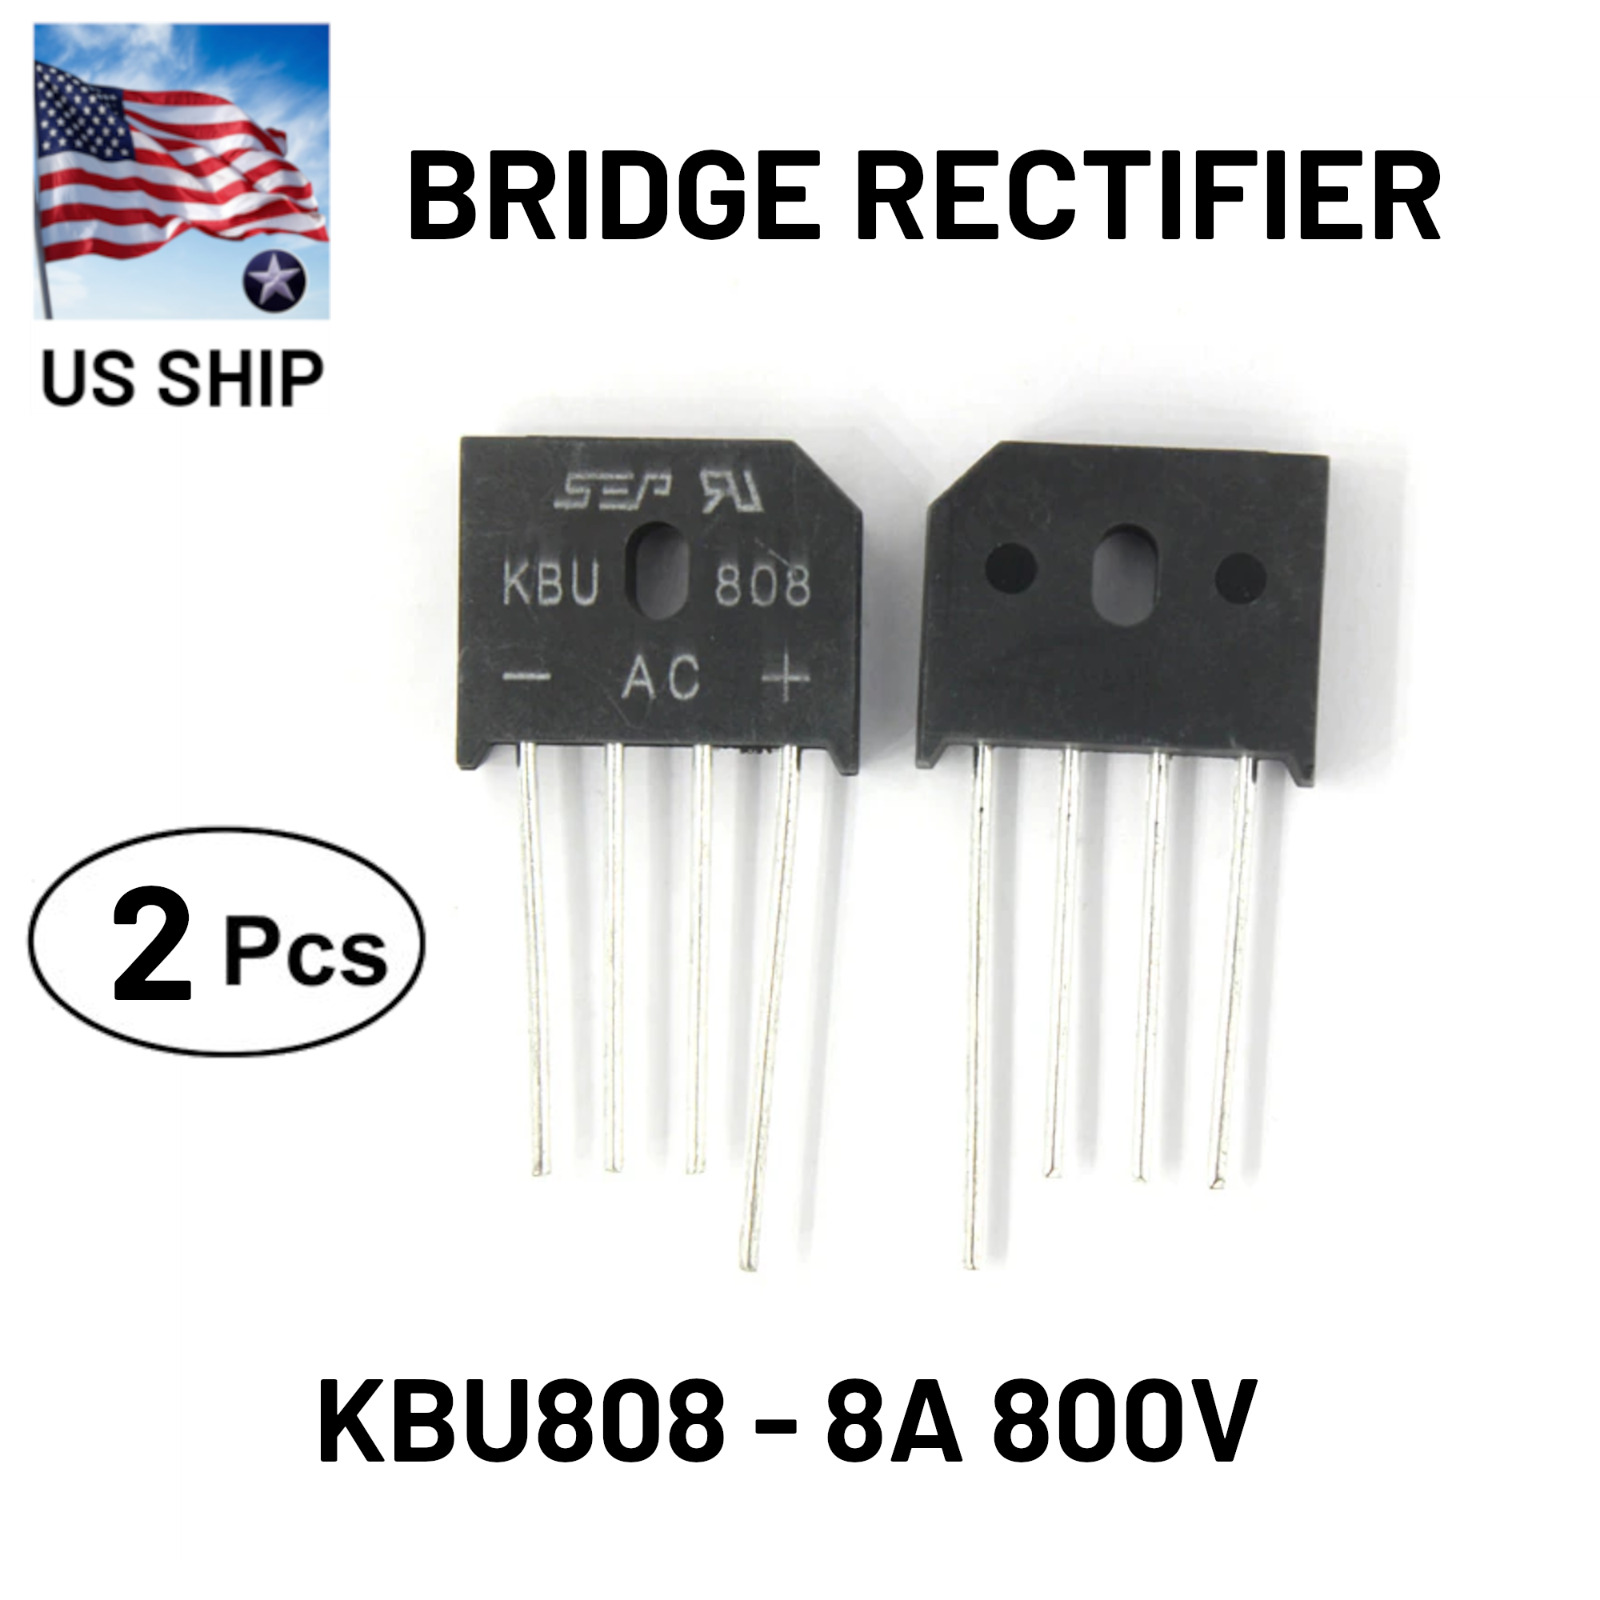 2 Pcs KBU808 Bridge Rectifier | KBU808 Bridge Rectifier 800V 8A | US Ship